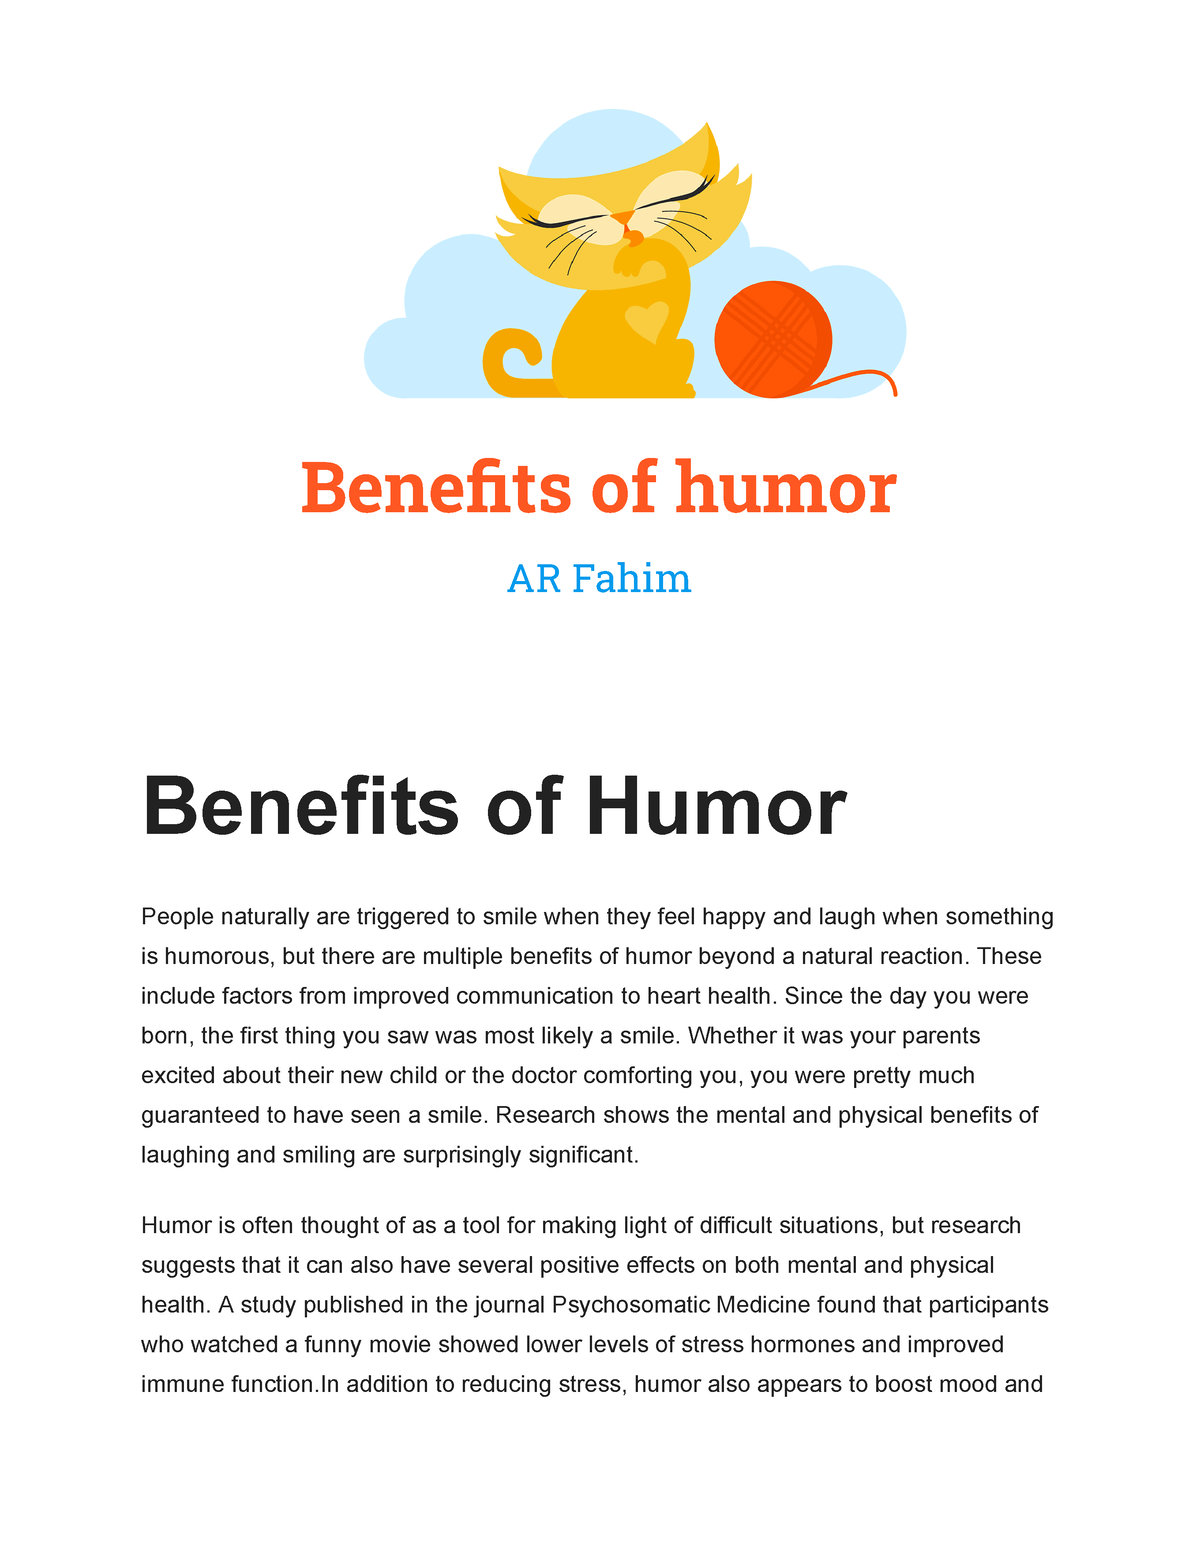 humor research essay